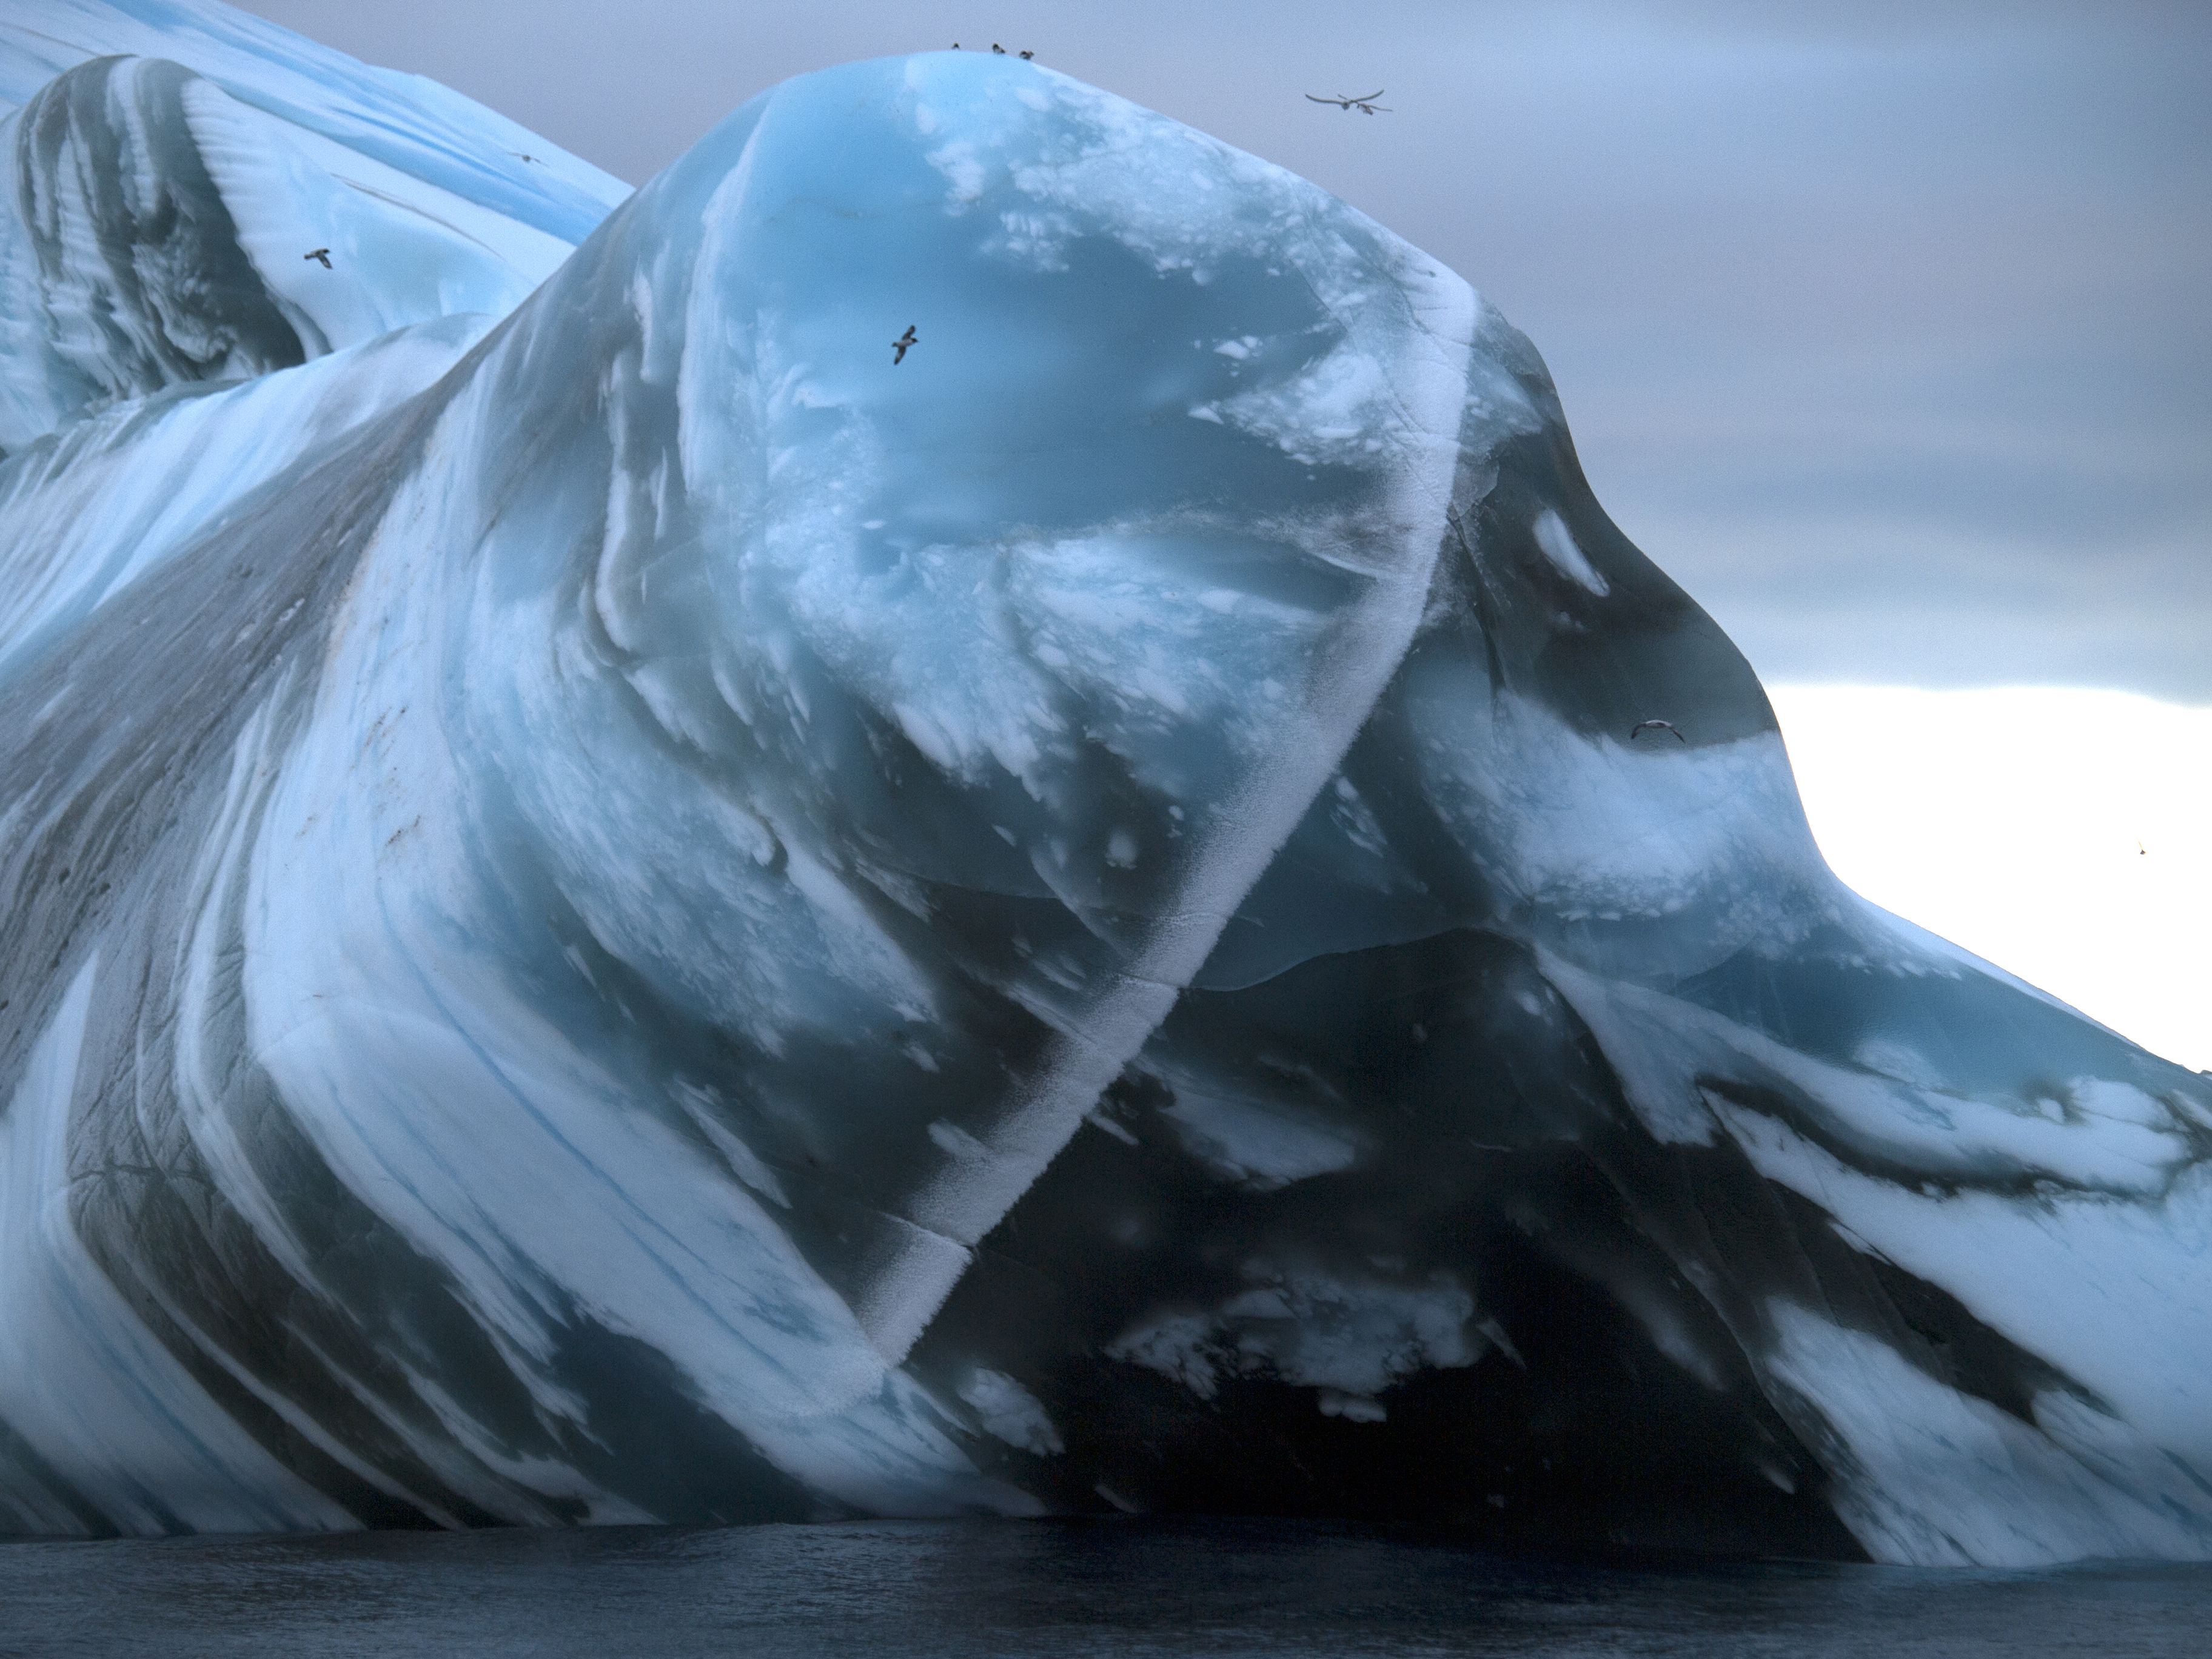 The underside of an old iceberg.